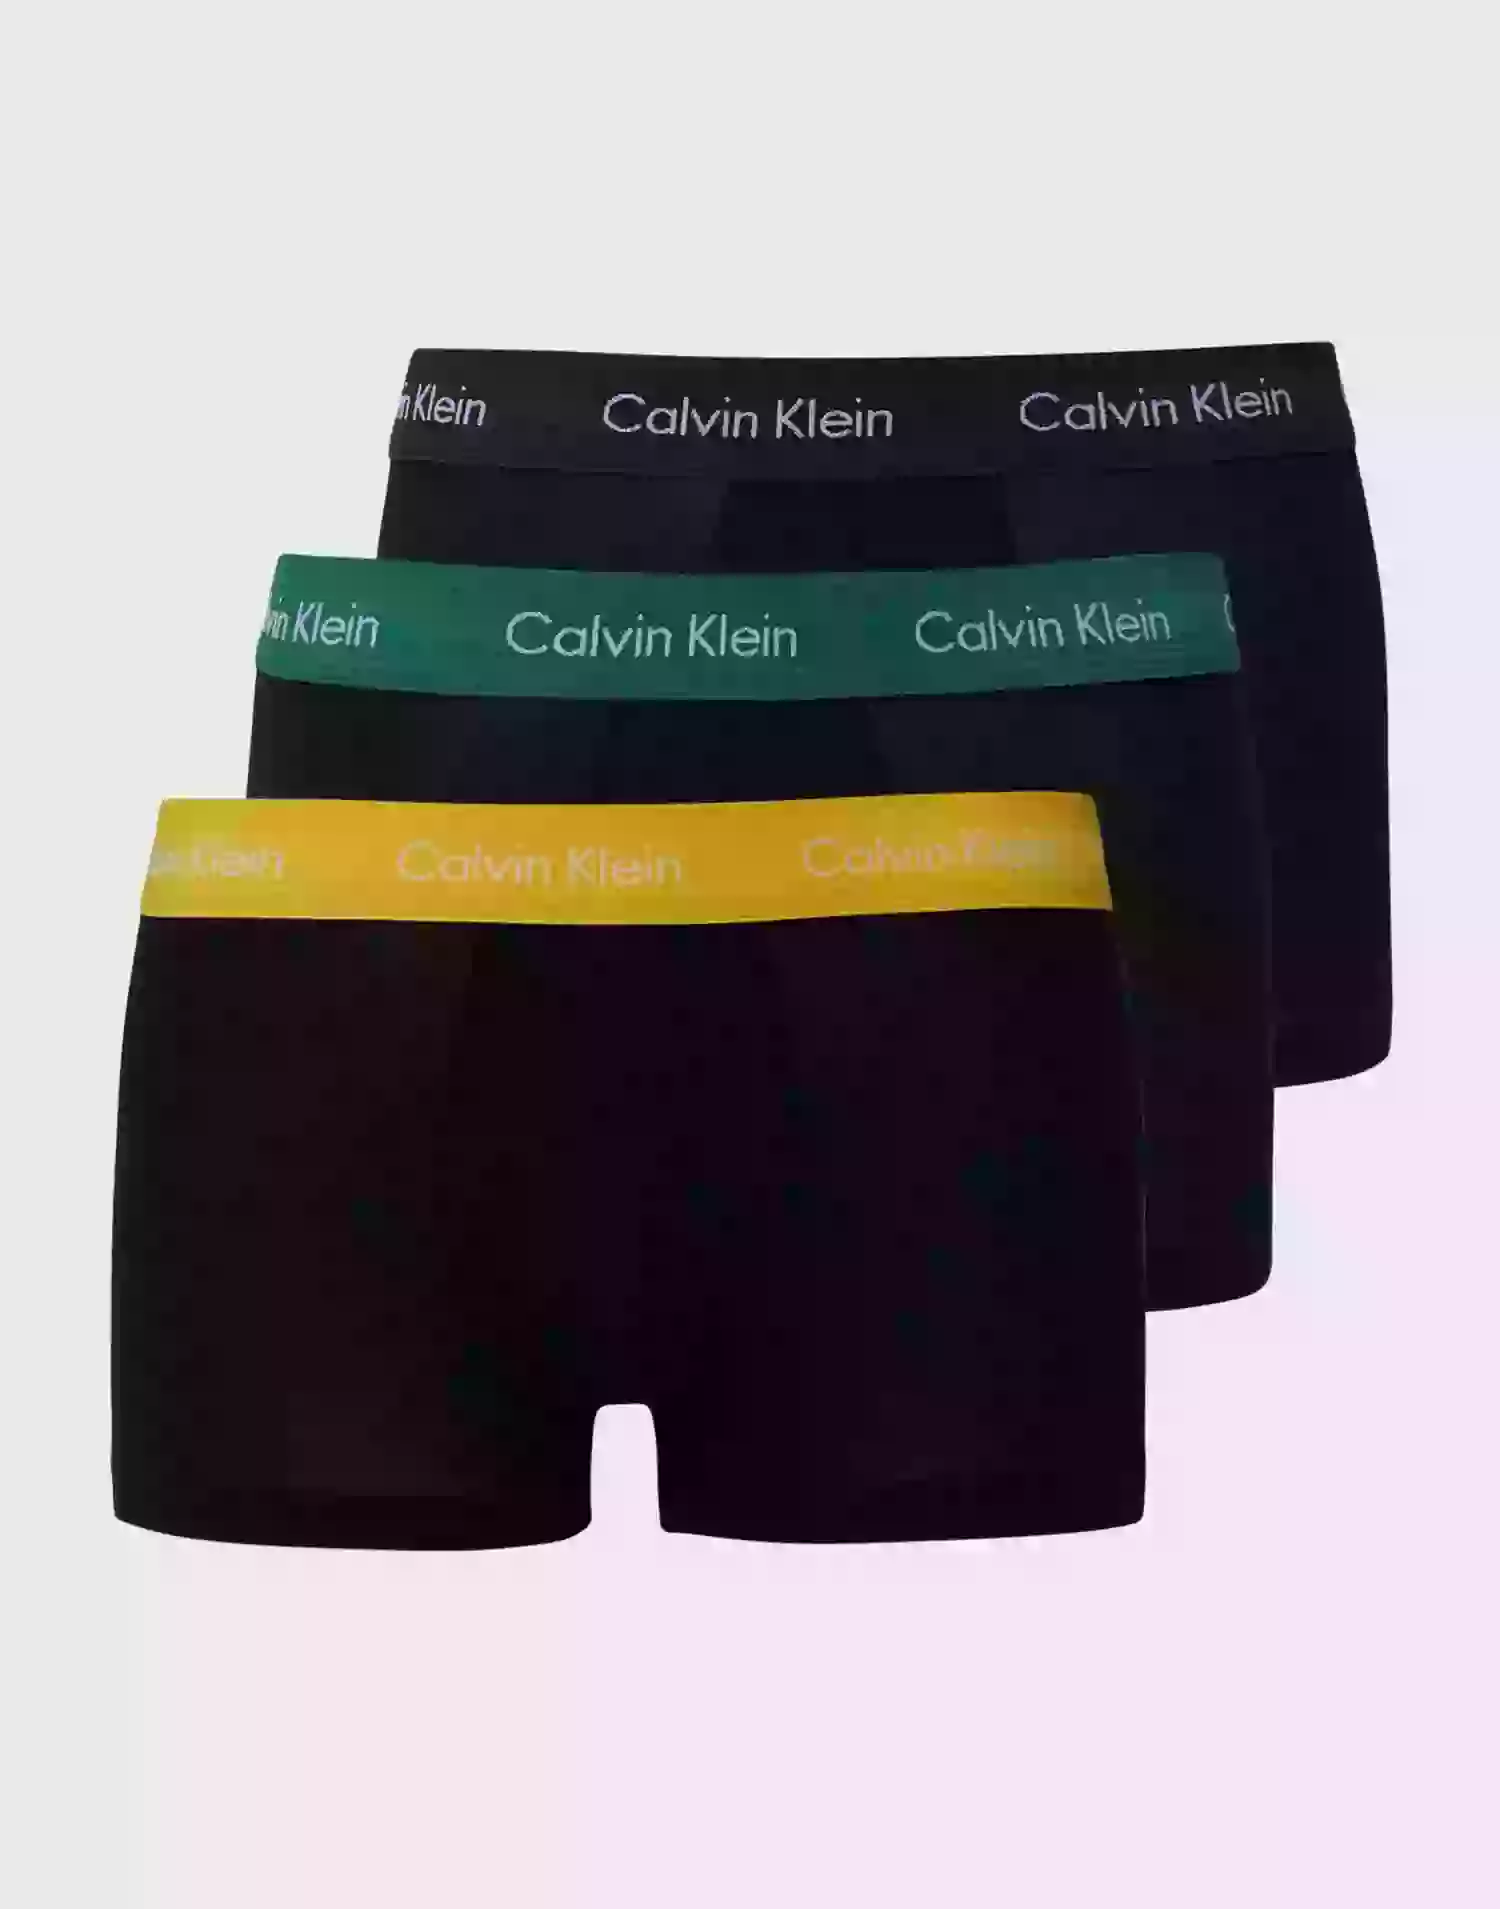 Calvin Klein Underwear Low Rise Trunk 3PK Underbukser B-CHRCL HTHR, MRNGSD YW, FLG GRN WB